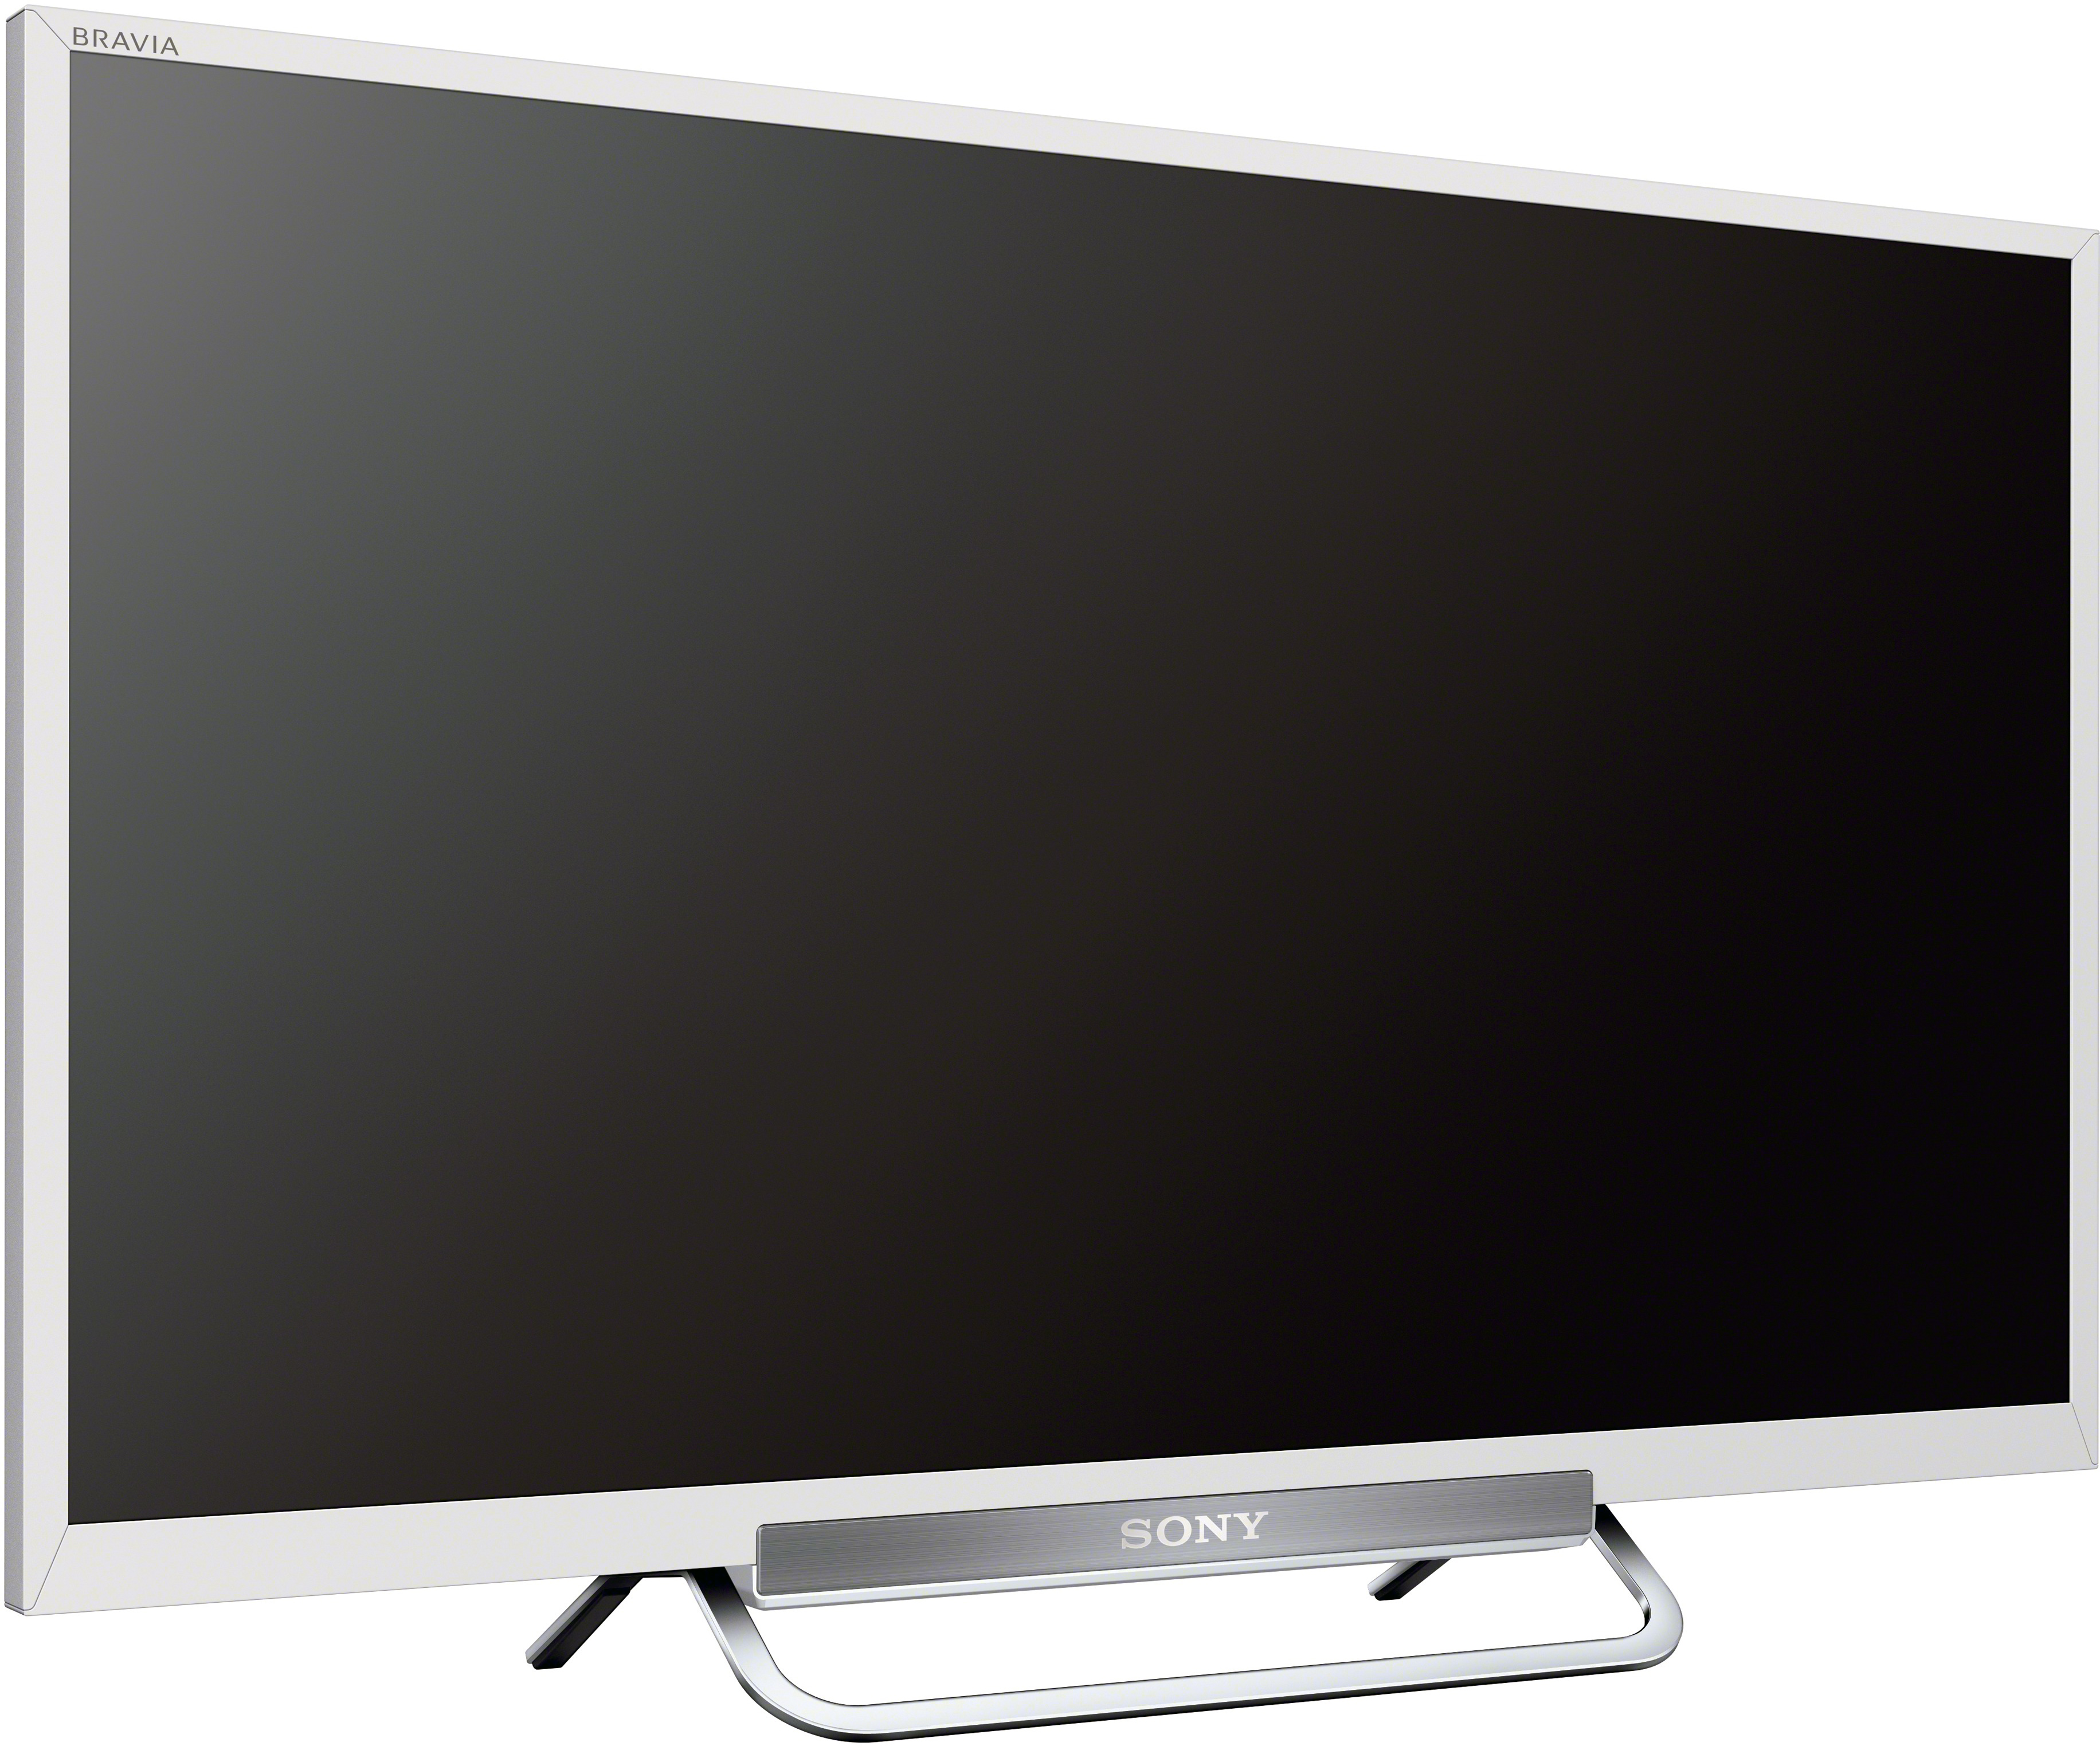 Телевизор 24 вольта. Sony KDL 24w605a. Sony KDL-24w605a led. LCD телевизор Sony KDL-24w605a. Телевизор Sony KDL-24w605a 24 белый.